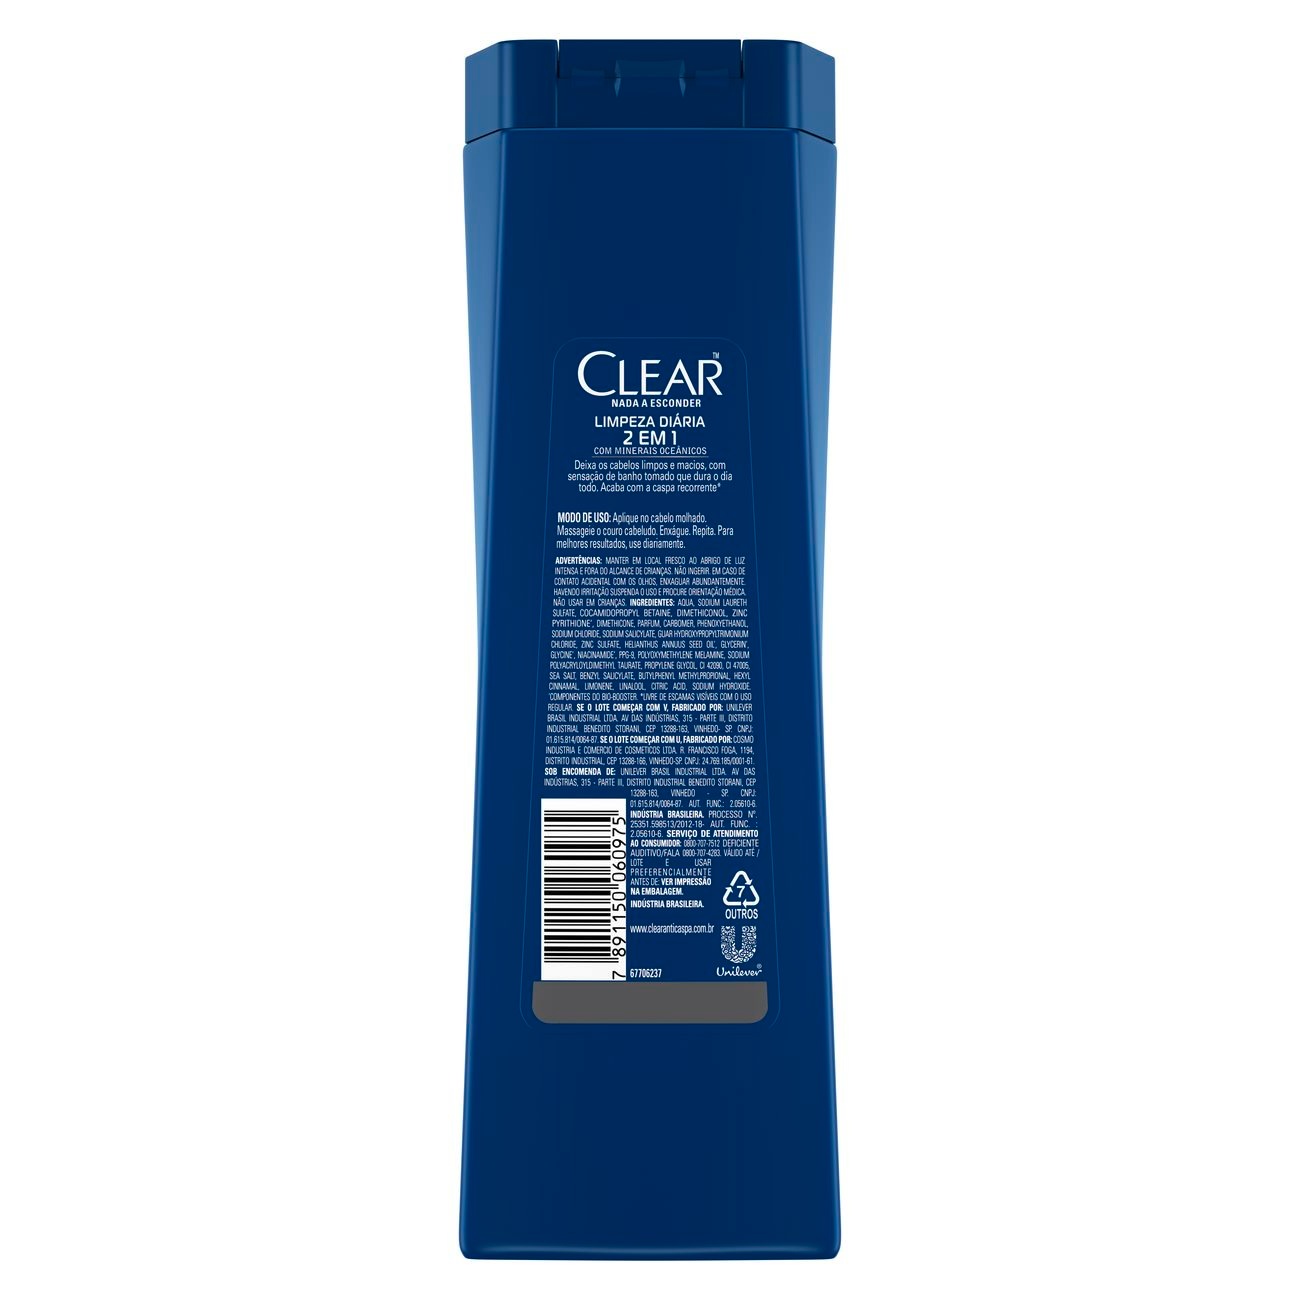 Oferta Clear Shampoo Anticaspa Limpeza Diria 2 em 1 400ml